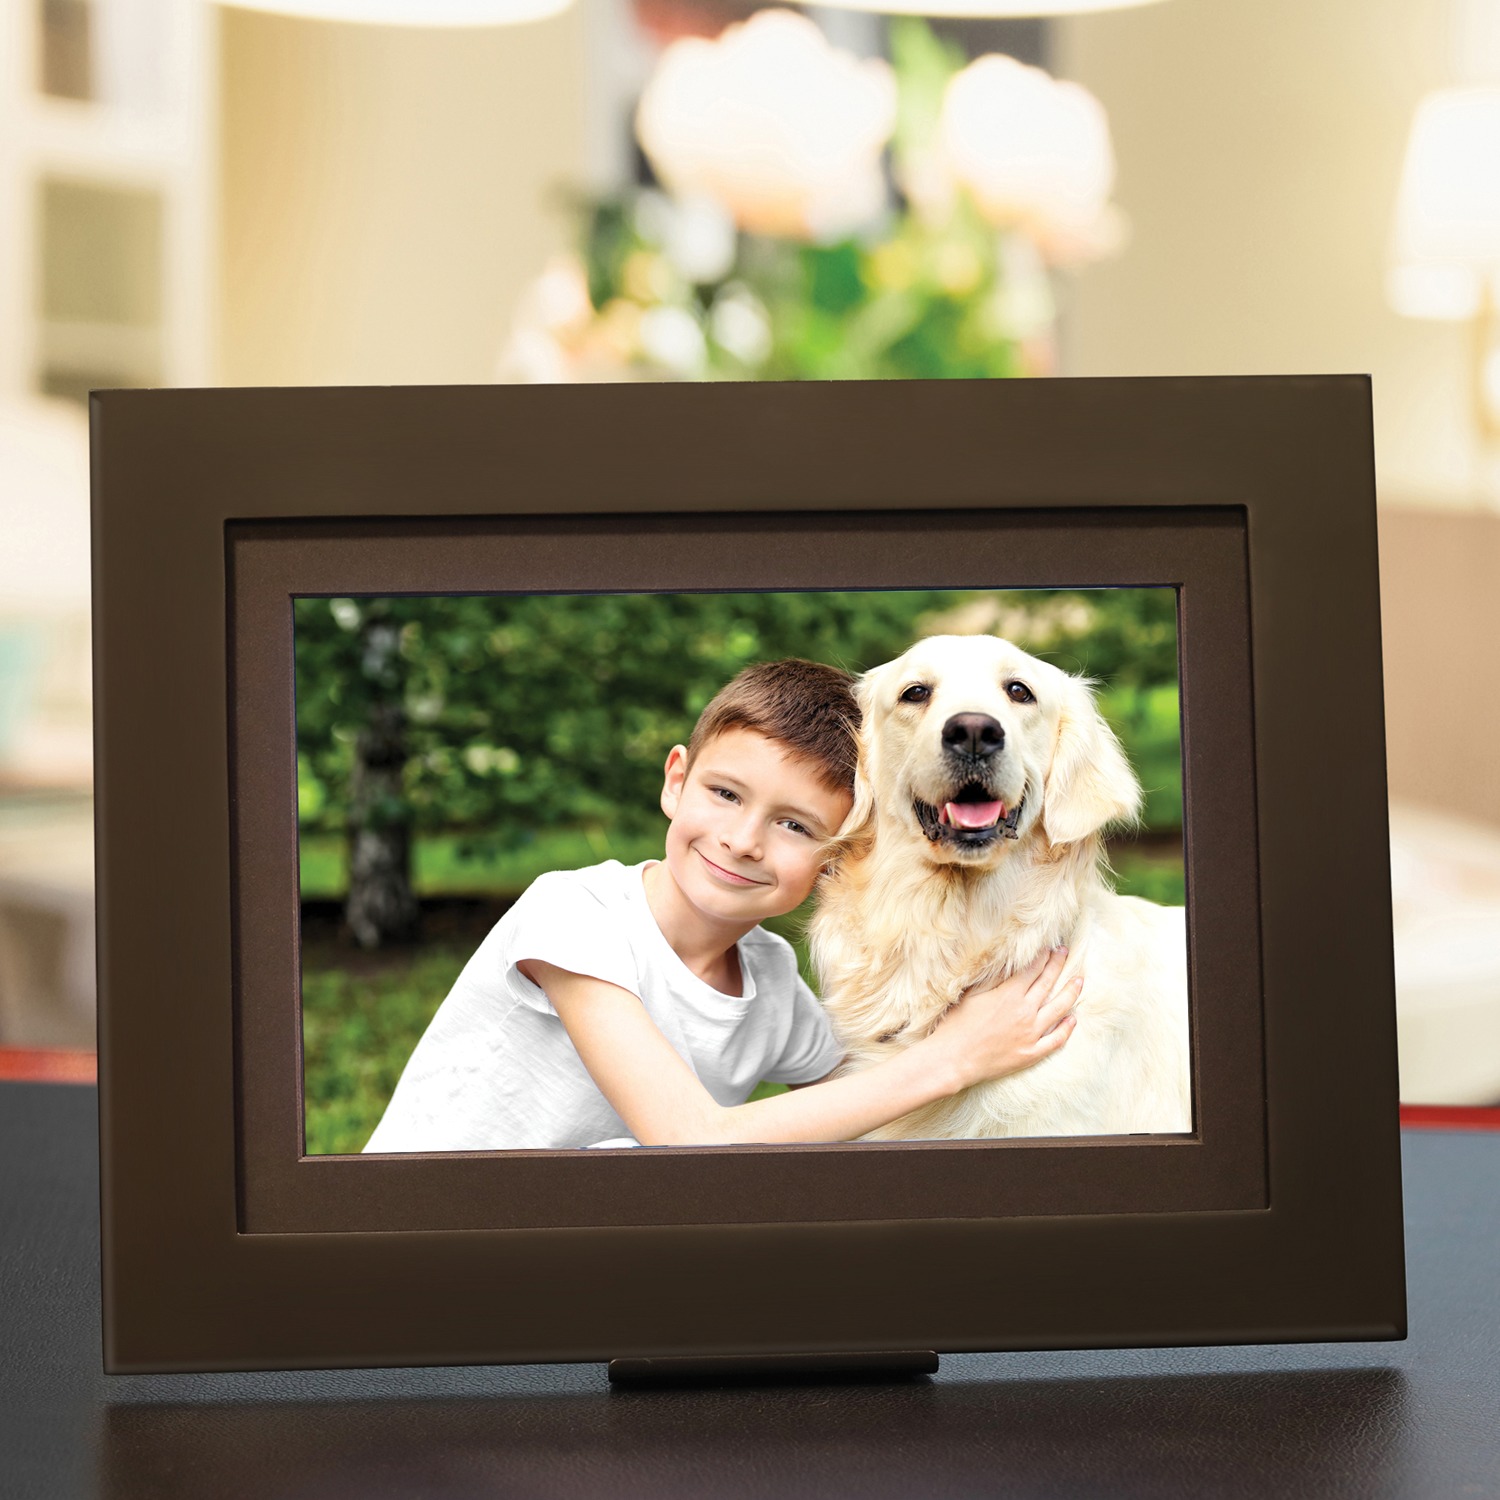 Brookstone PhotoShare 8" Smart Digital Picure Frame in Black - image 5 of 6